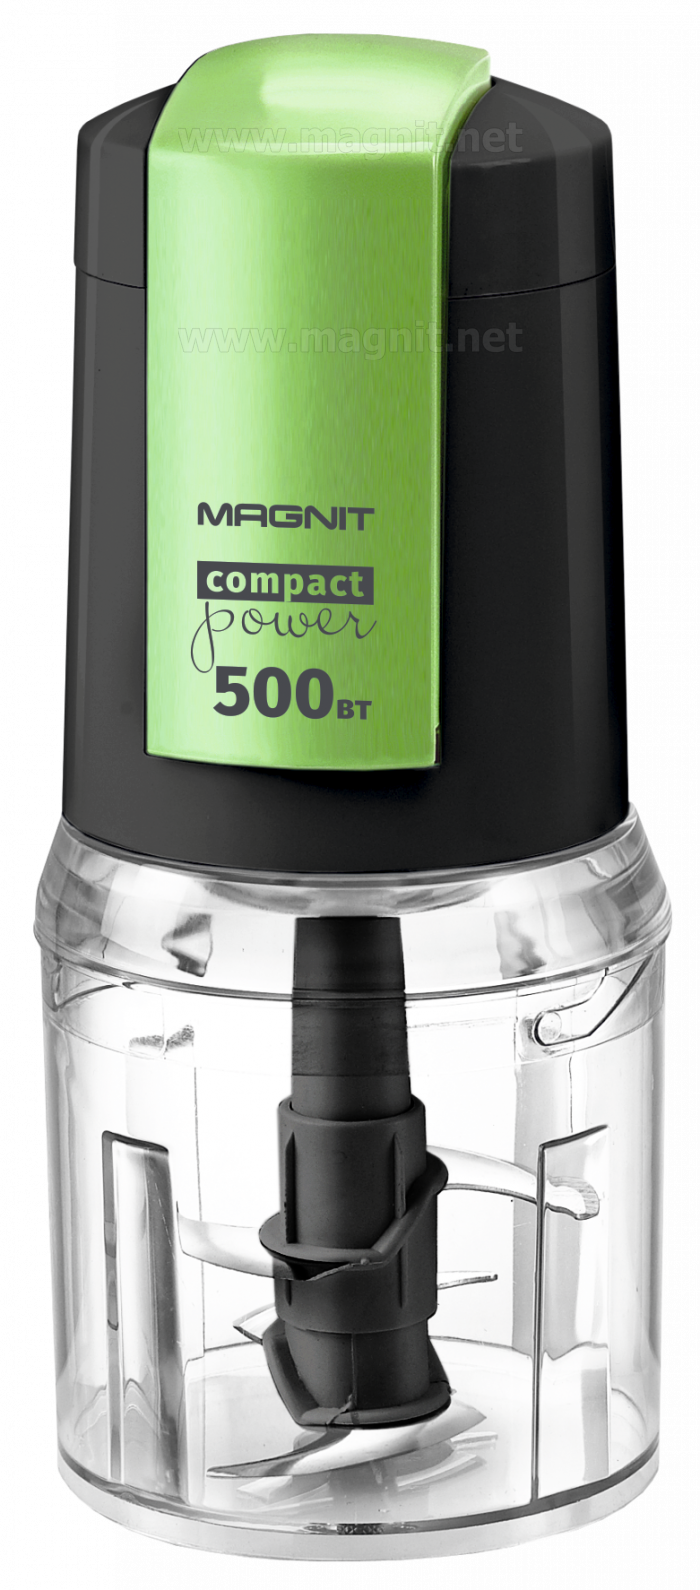 Чоппер Magnit RMF-1820, 500 Вт, 0,5 л.